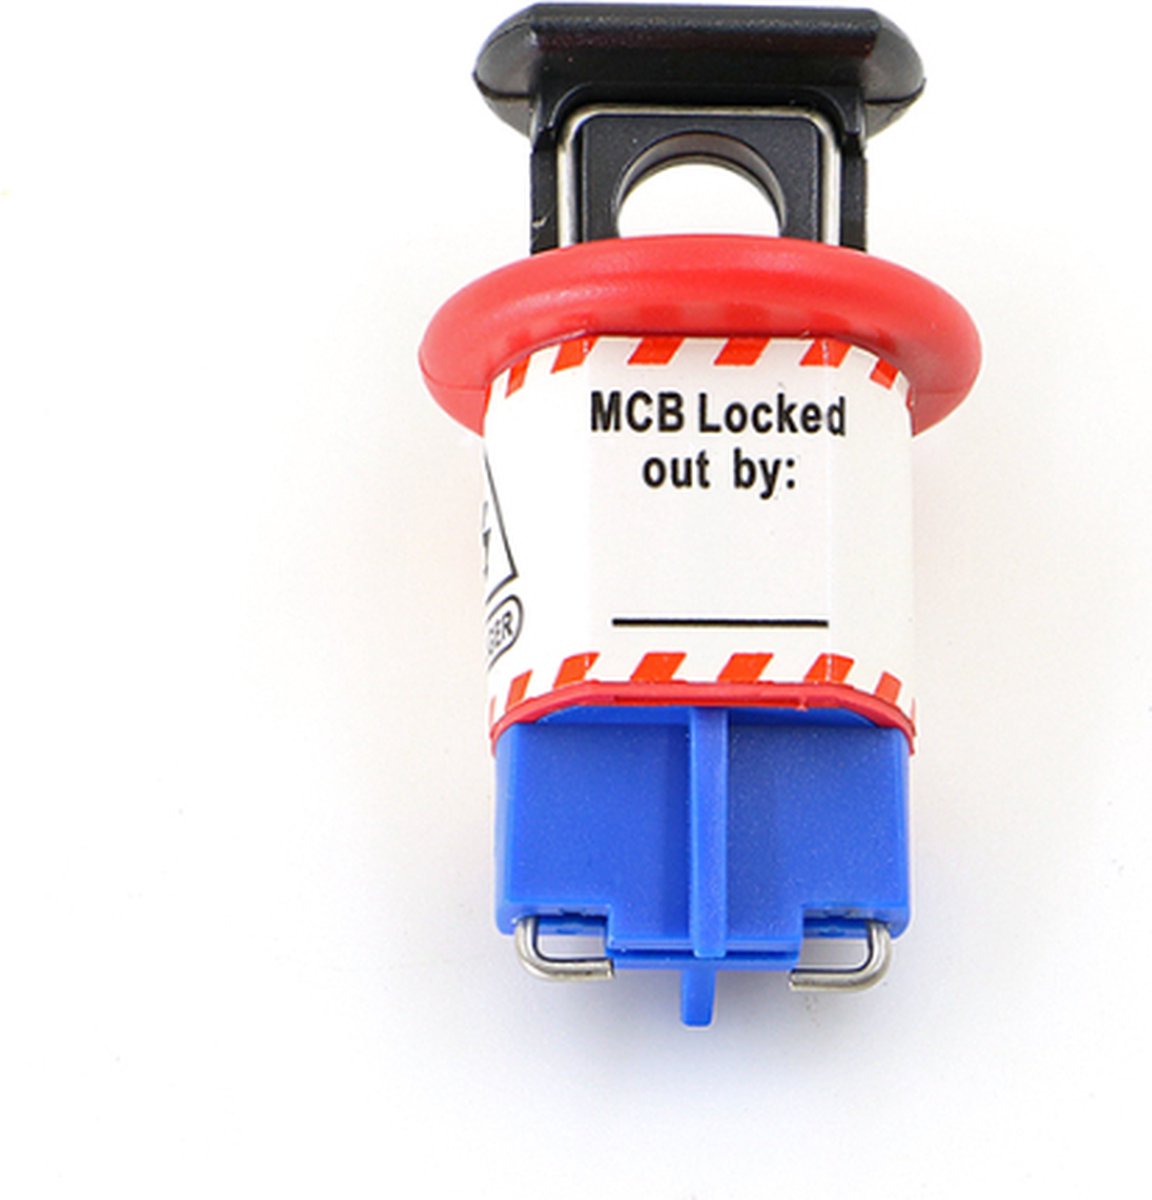 Vergrendelingssysteem instalatieautomaat / Stroomonderbreker - Lock Out Tag Out - LOTO - LOTOTO - Lockout systeem - Vergrendelingssysteem - Lock out - Tag out